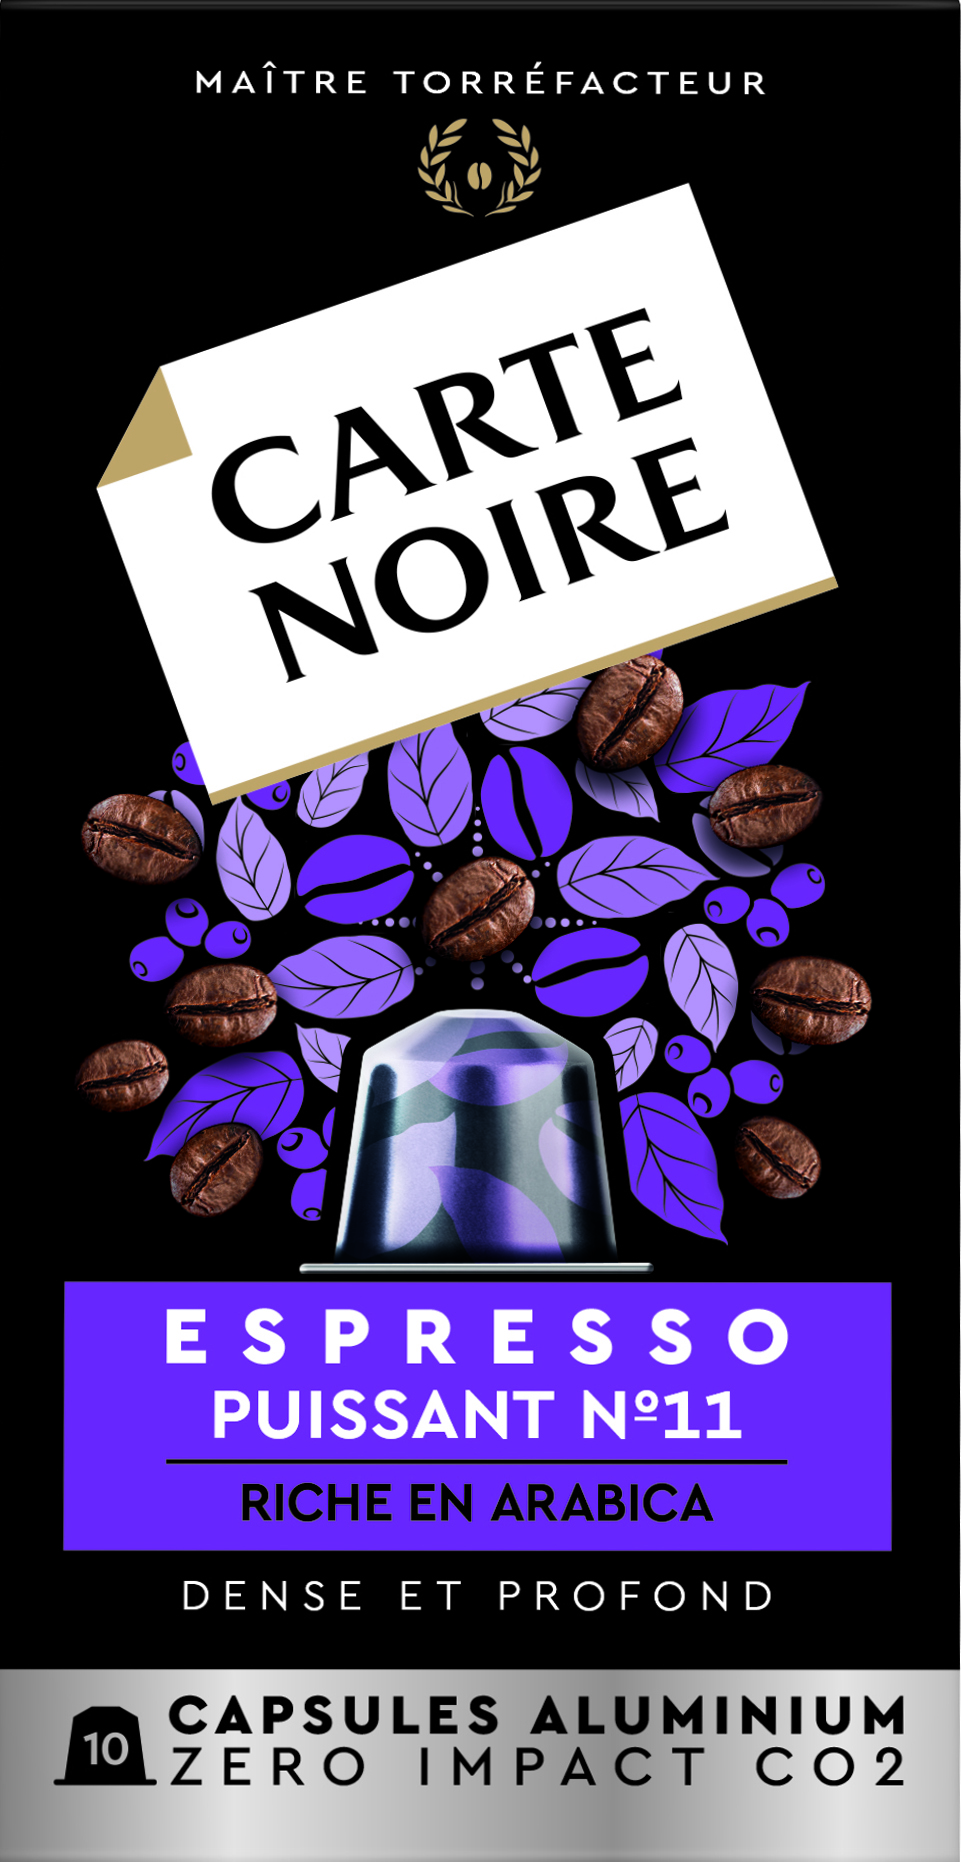 Capsules Café Espresso Puissant Compatibles Nespresso; x10; 55g - CARTE NOIRE